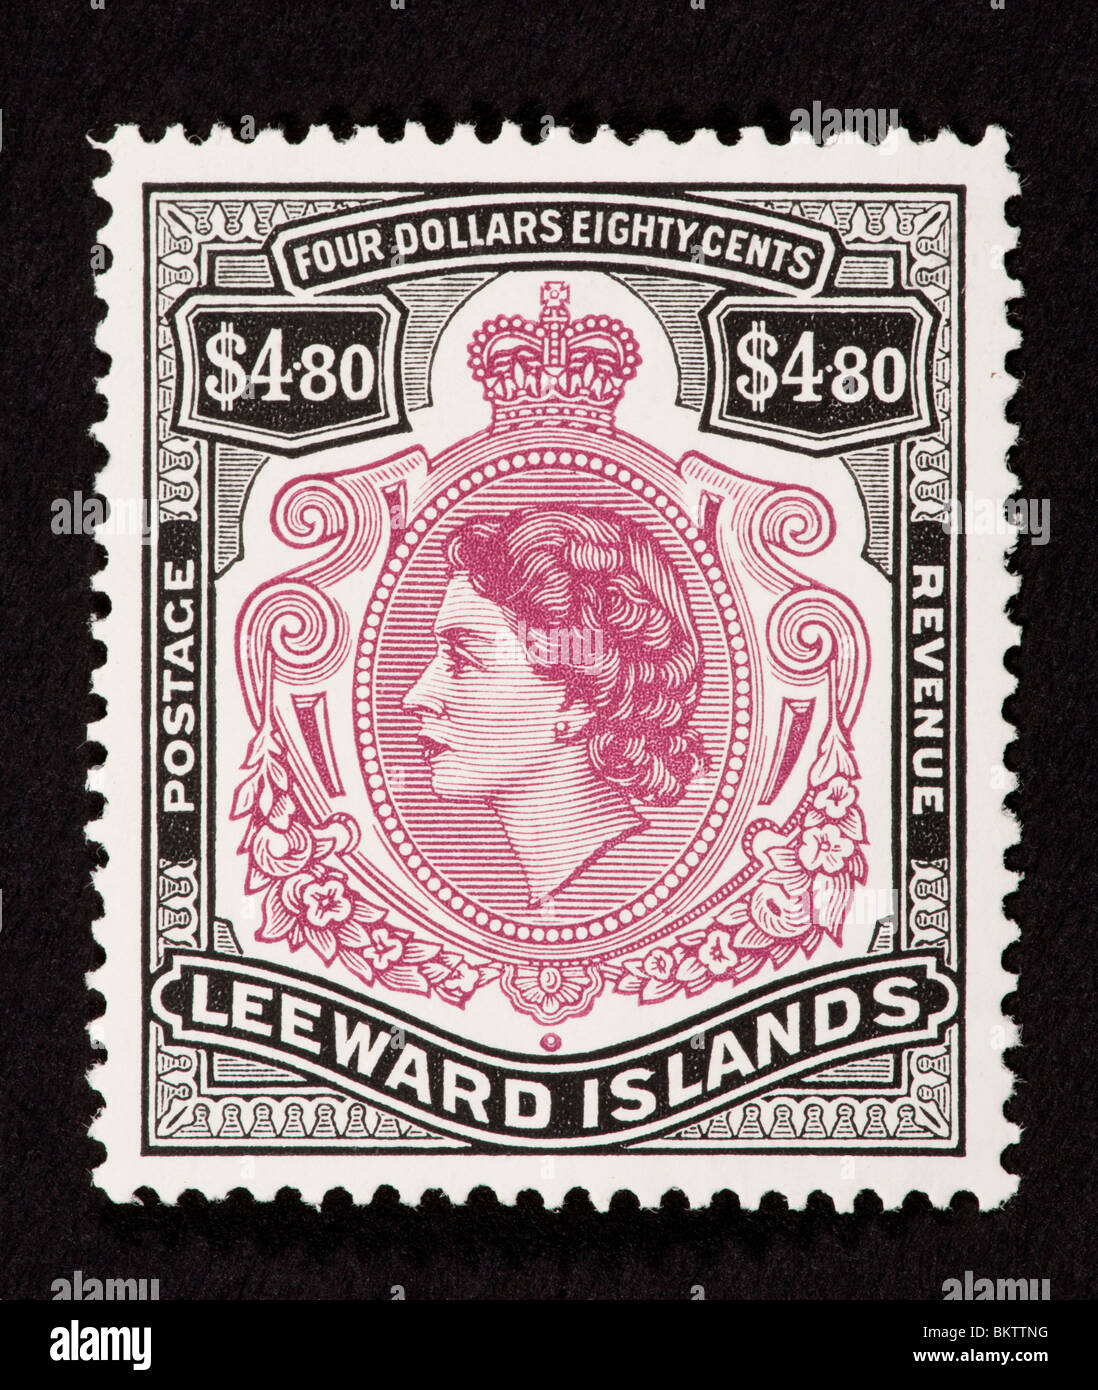 Francobollo da Isole Leeward raffigurante la regina Elisabetta II. Foto Stock